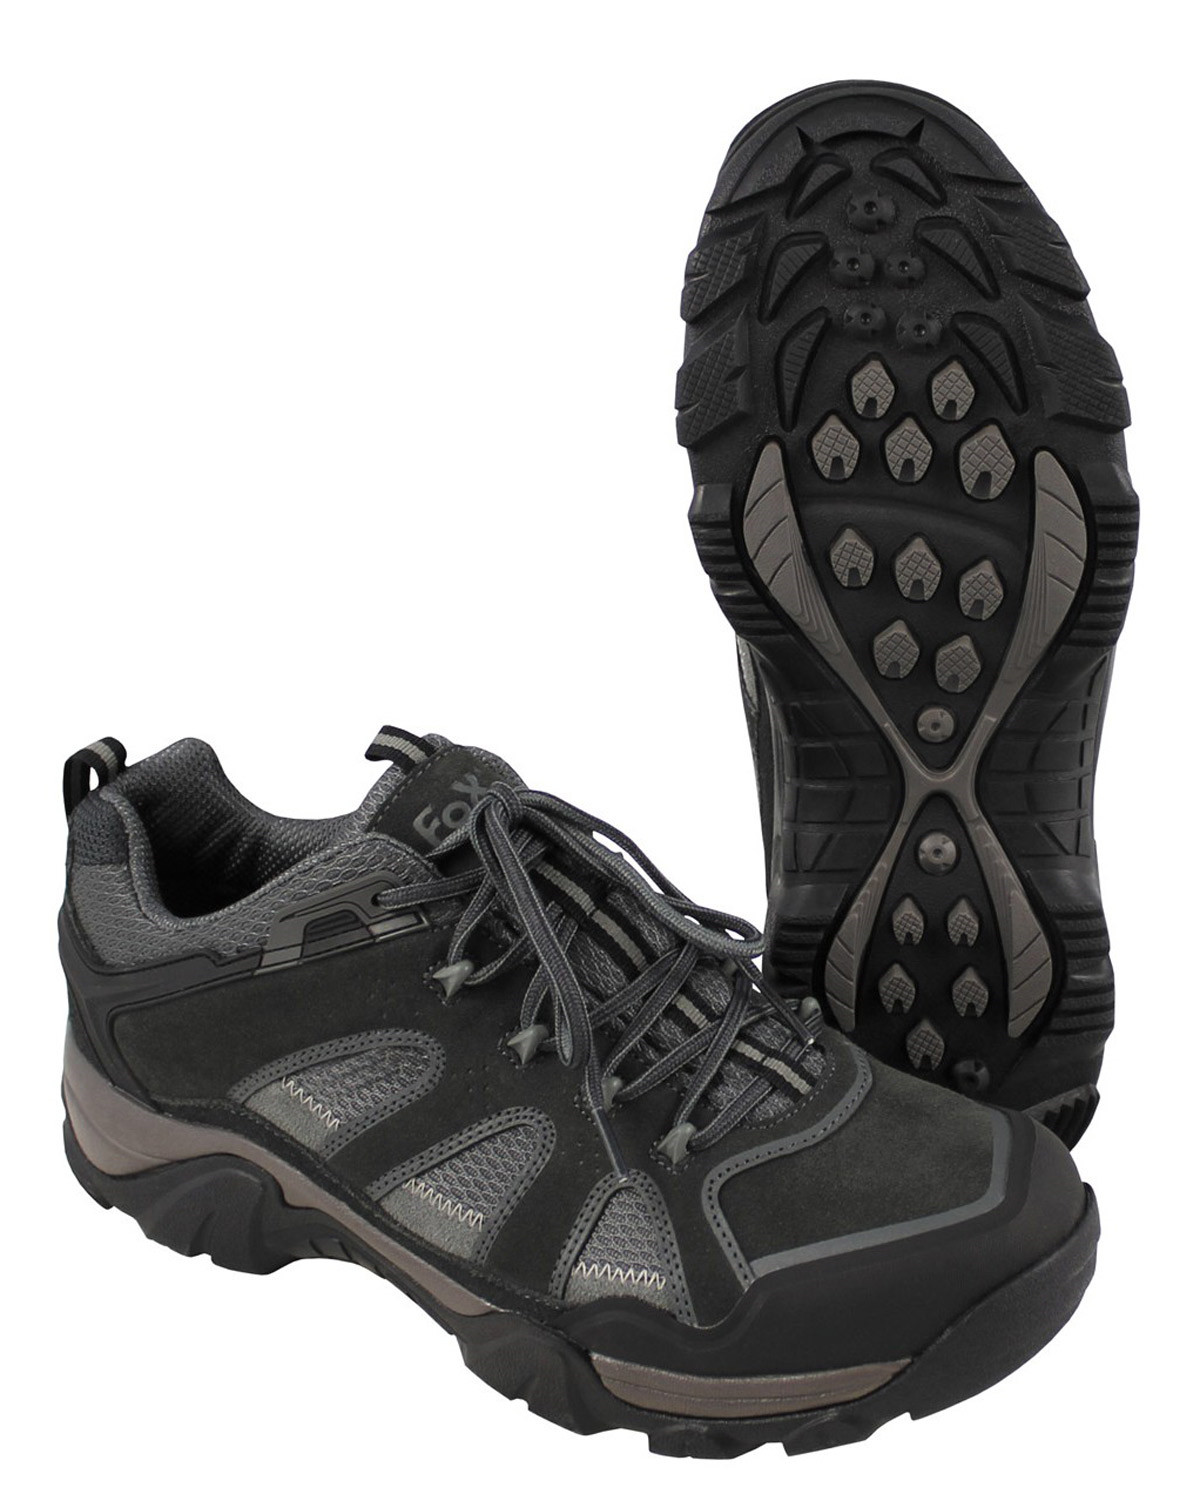 MFH Trekking Shoes (Sort / Charcoal, 47 EU / 14 US)